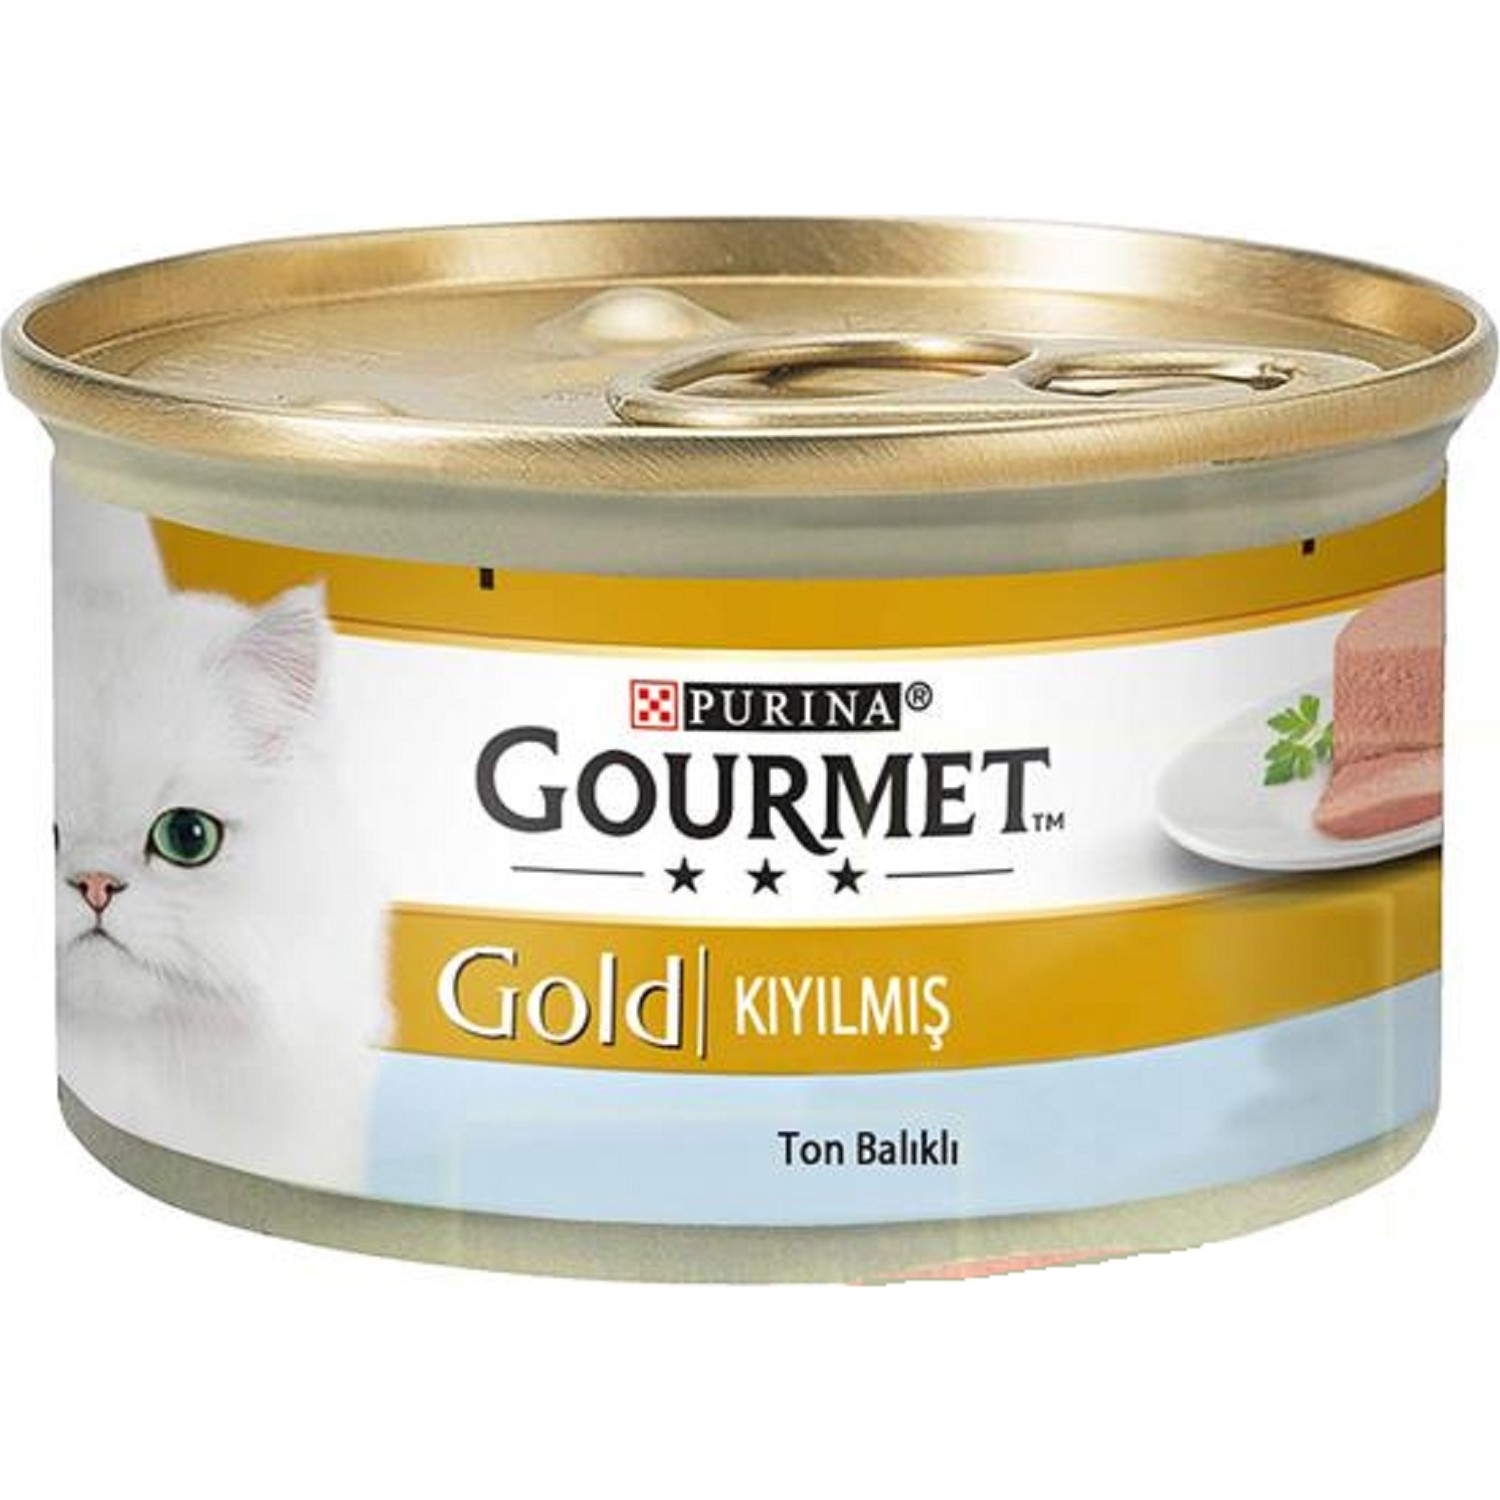 Purina Gourmet Gold Kiyilmis Ton Baligi 85 Gr Fiyati